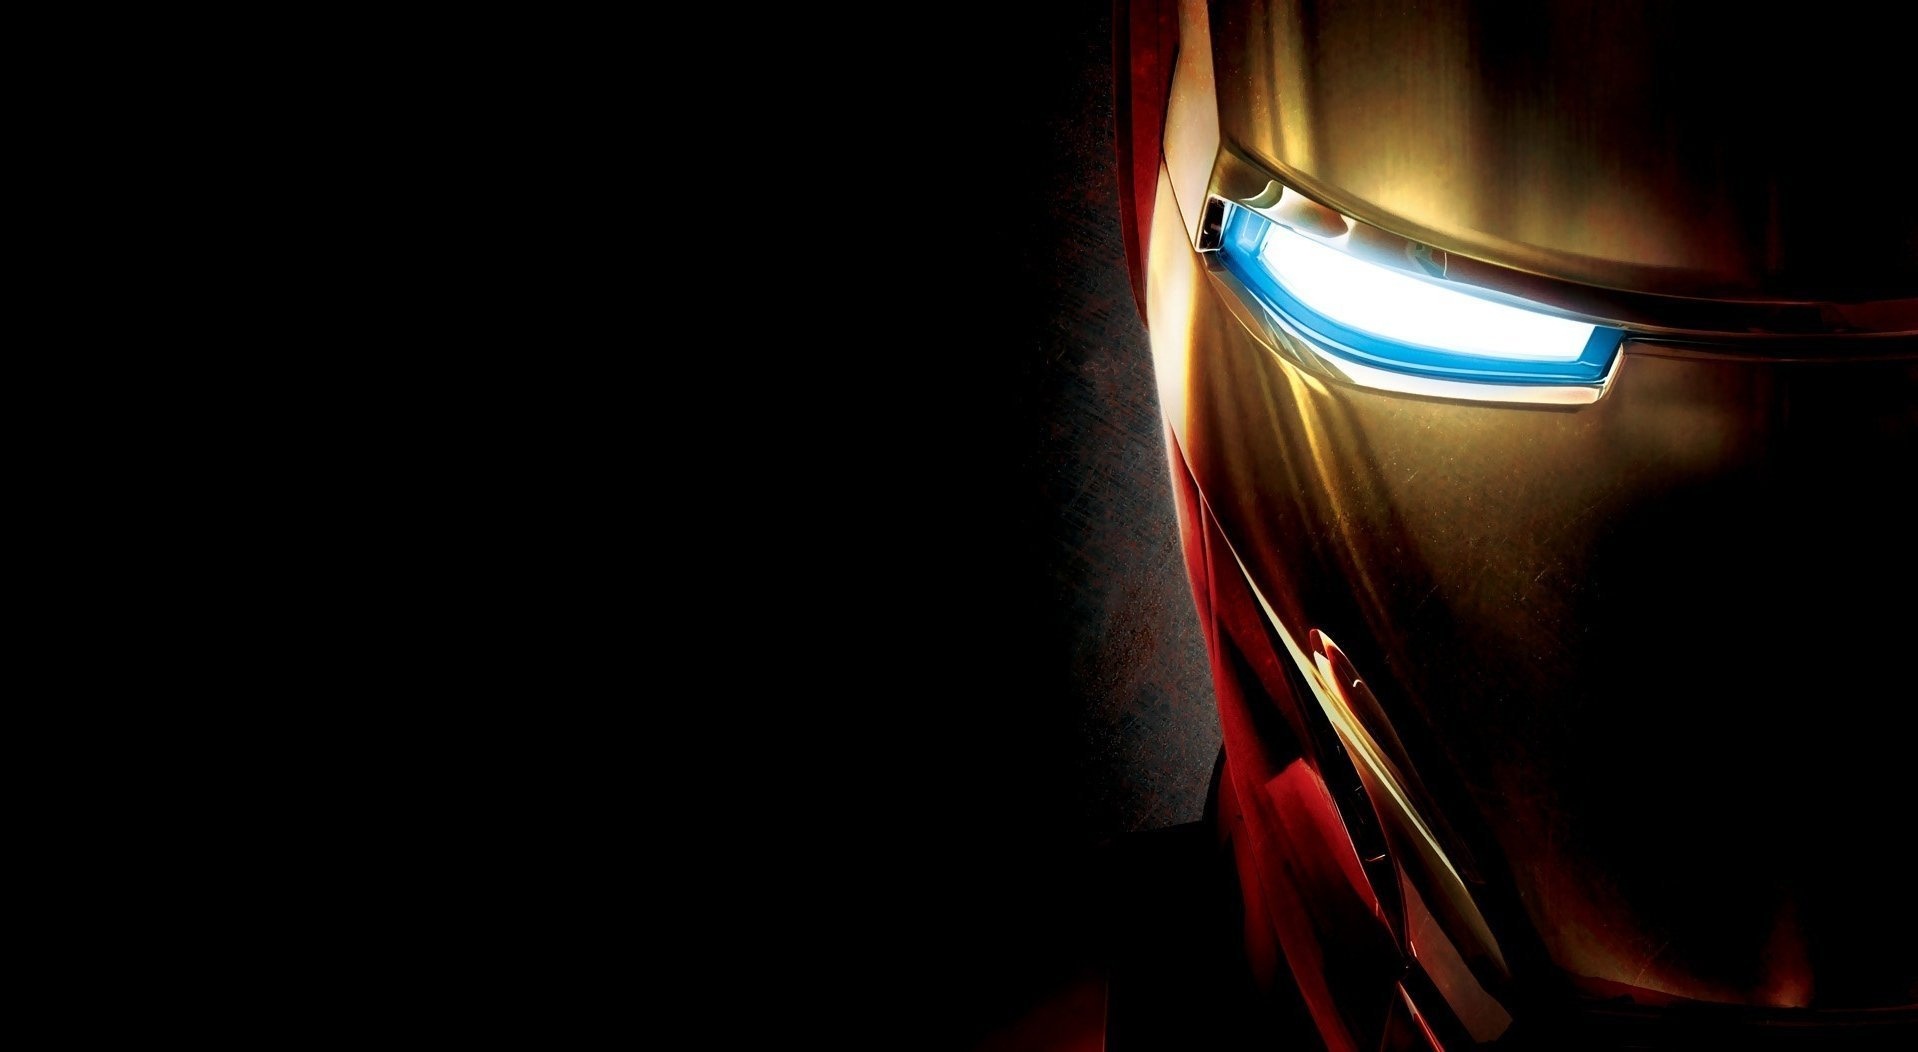 Iron Man Face - wallpaper.